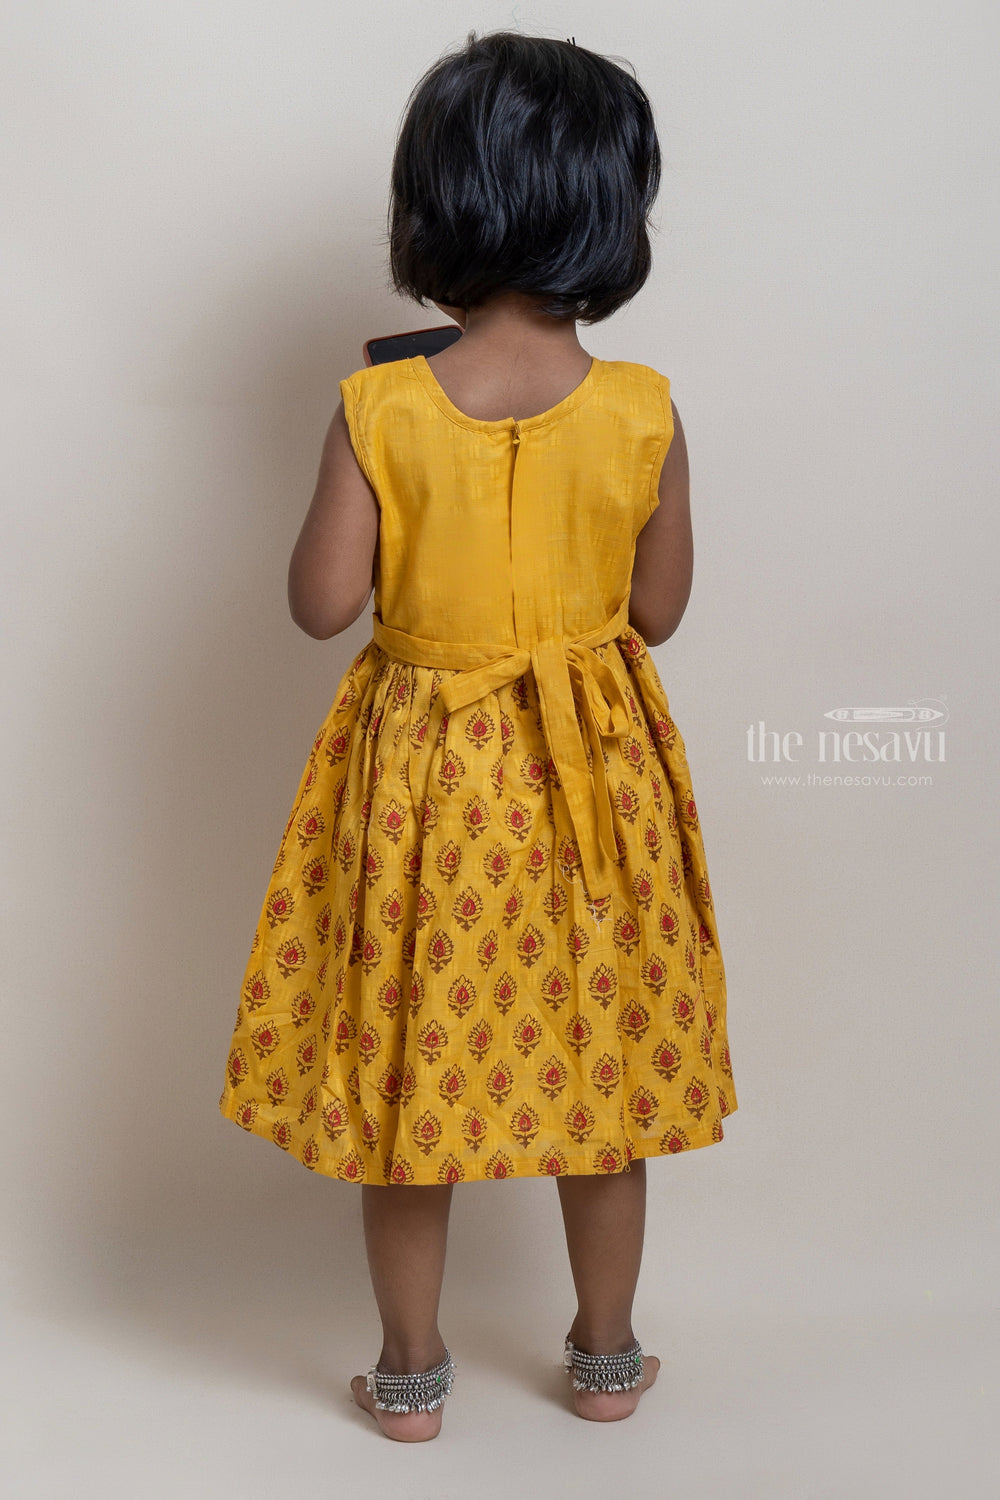 The Nesavu Girls Cotton Frock Adorable Yellow Butta Hand block Printed Sleeveless Cotton Frock For Girls Nesavu Fancy Yellow Cotton Frock For Girls | High Quality Frock | The Nesavu